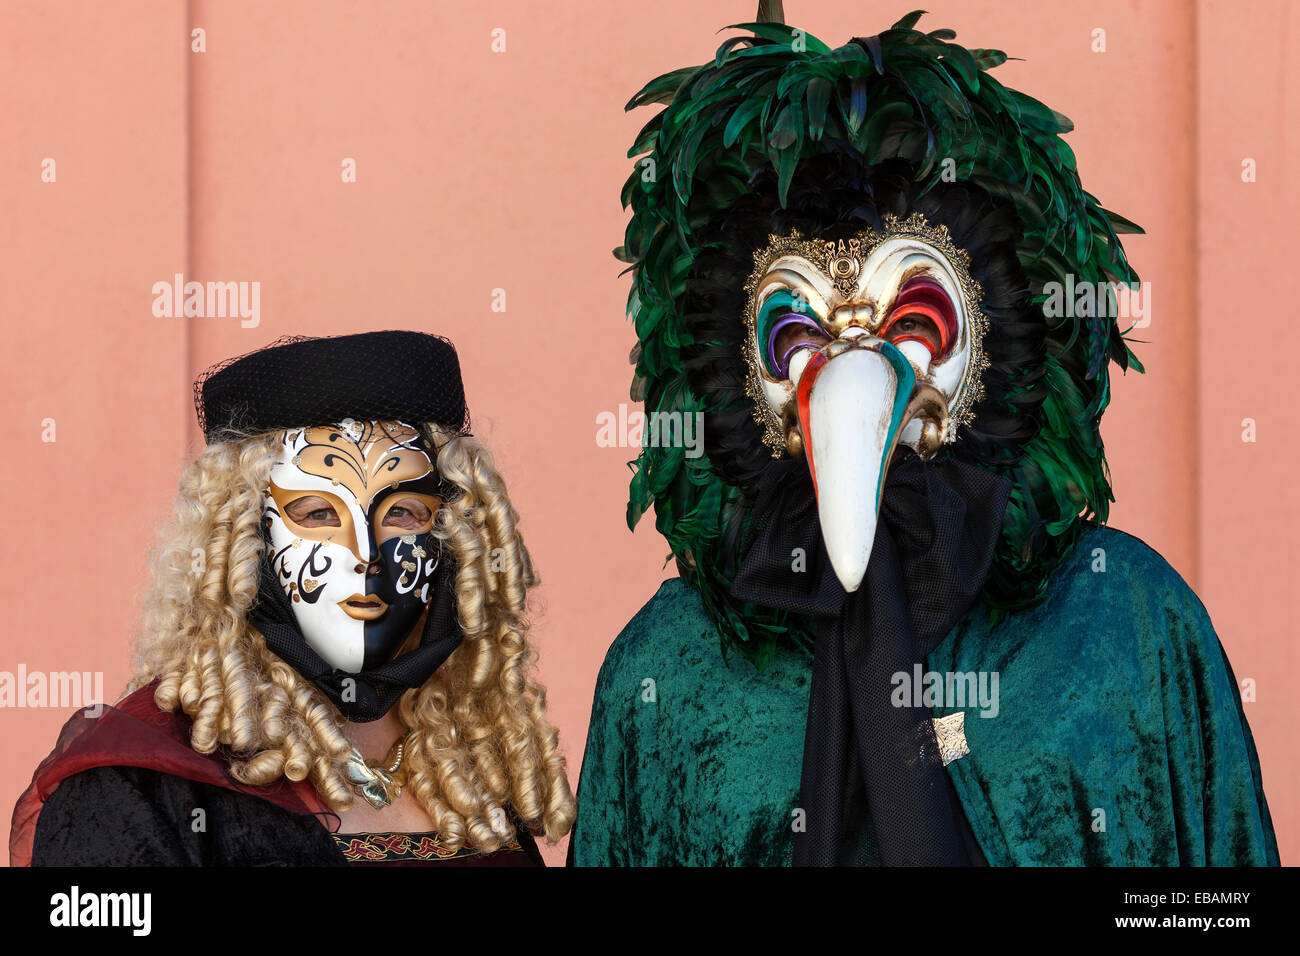 Masques et costumes de carnaval vénitien au Venetian juste, Ludwigsburg, Bade-Wurtemberg, Allemagne Banque D'Images